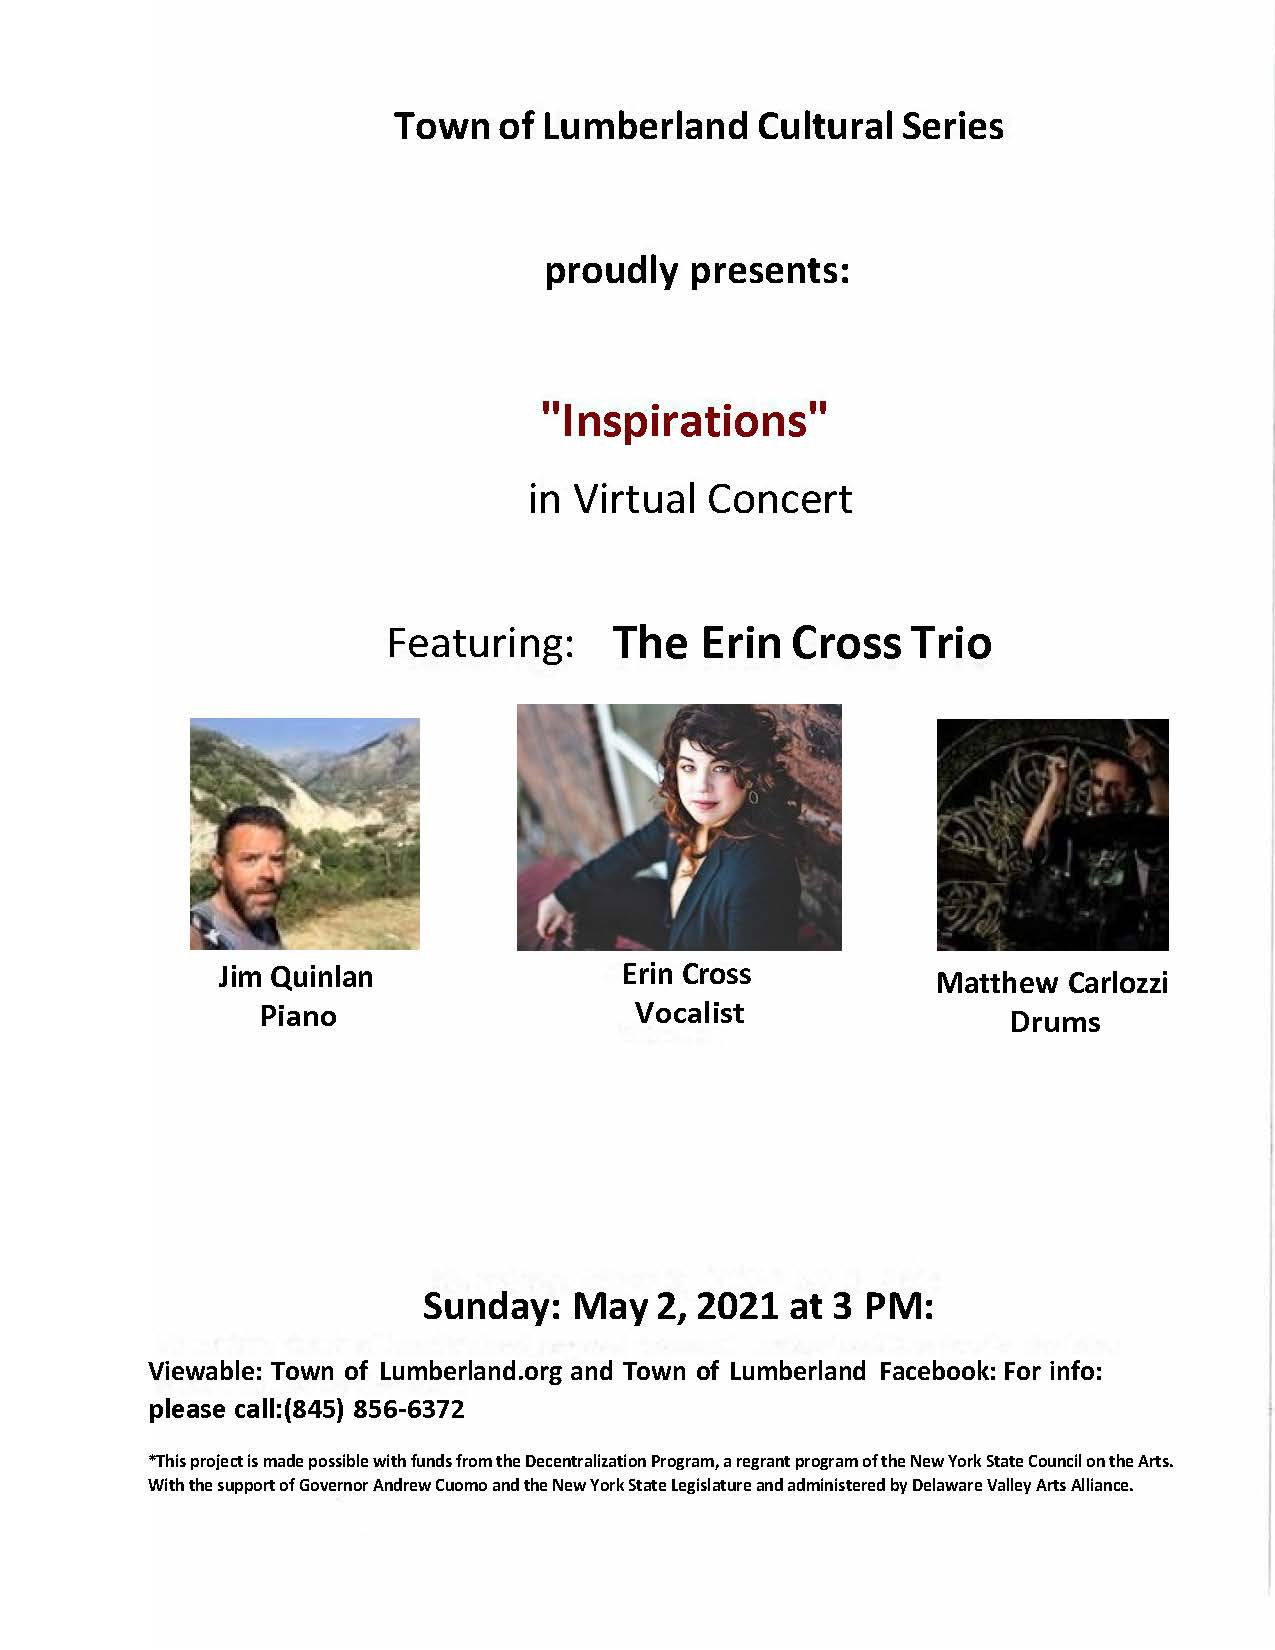 Erin Cross Trio Flyer version 2